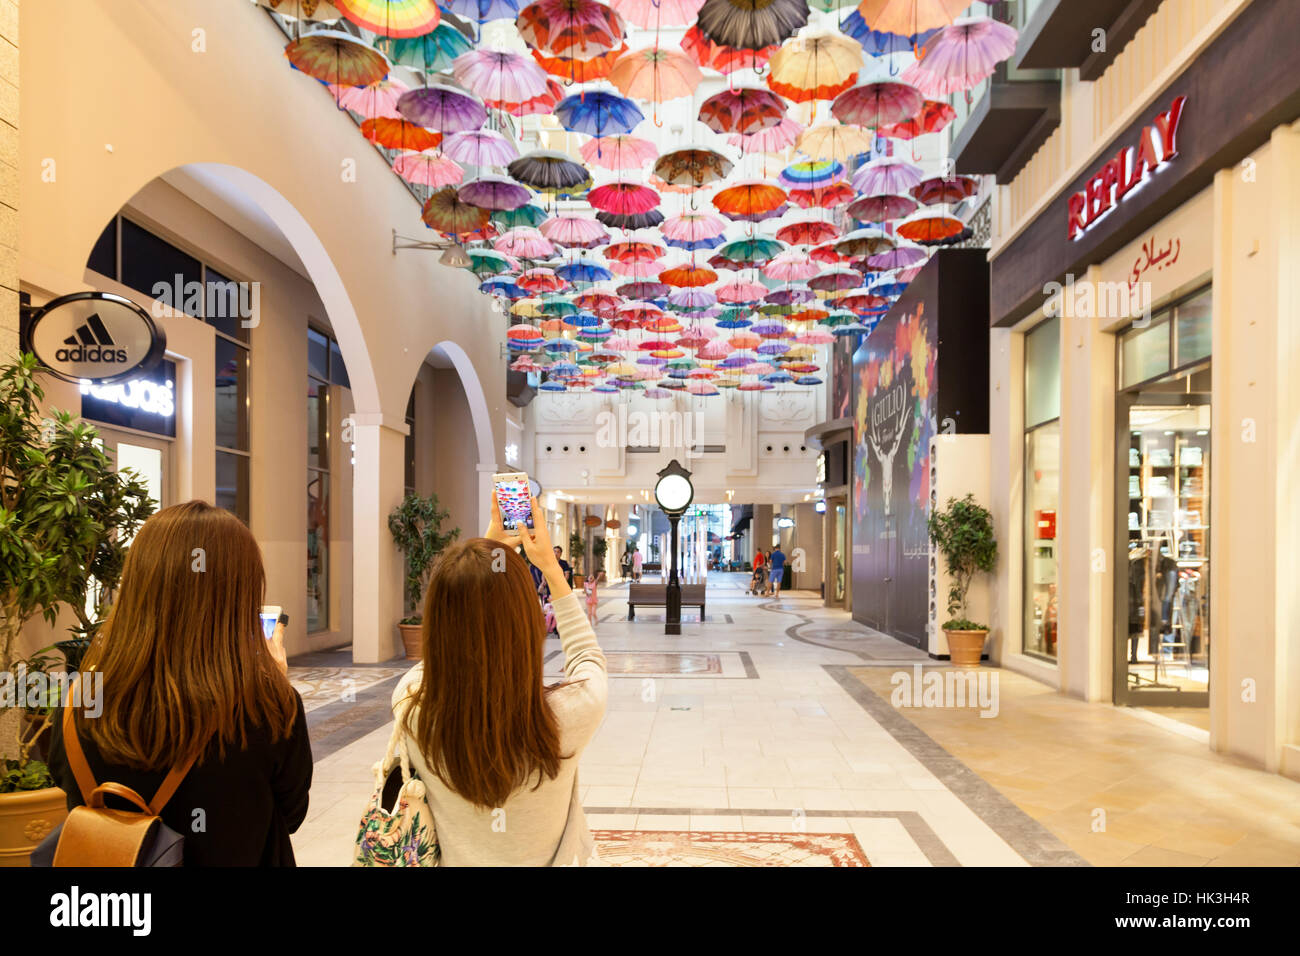 Bunte Regenschirme in der Dubai Mall Stockfotografie - Alamy